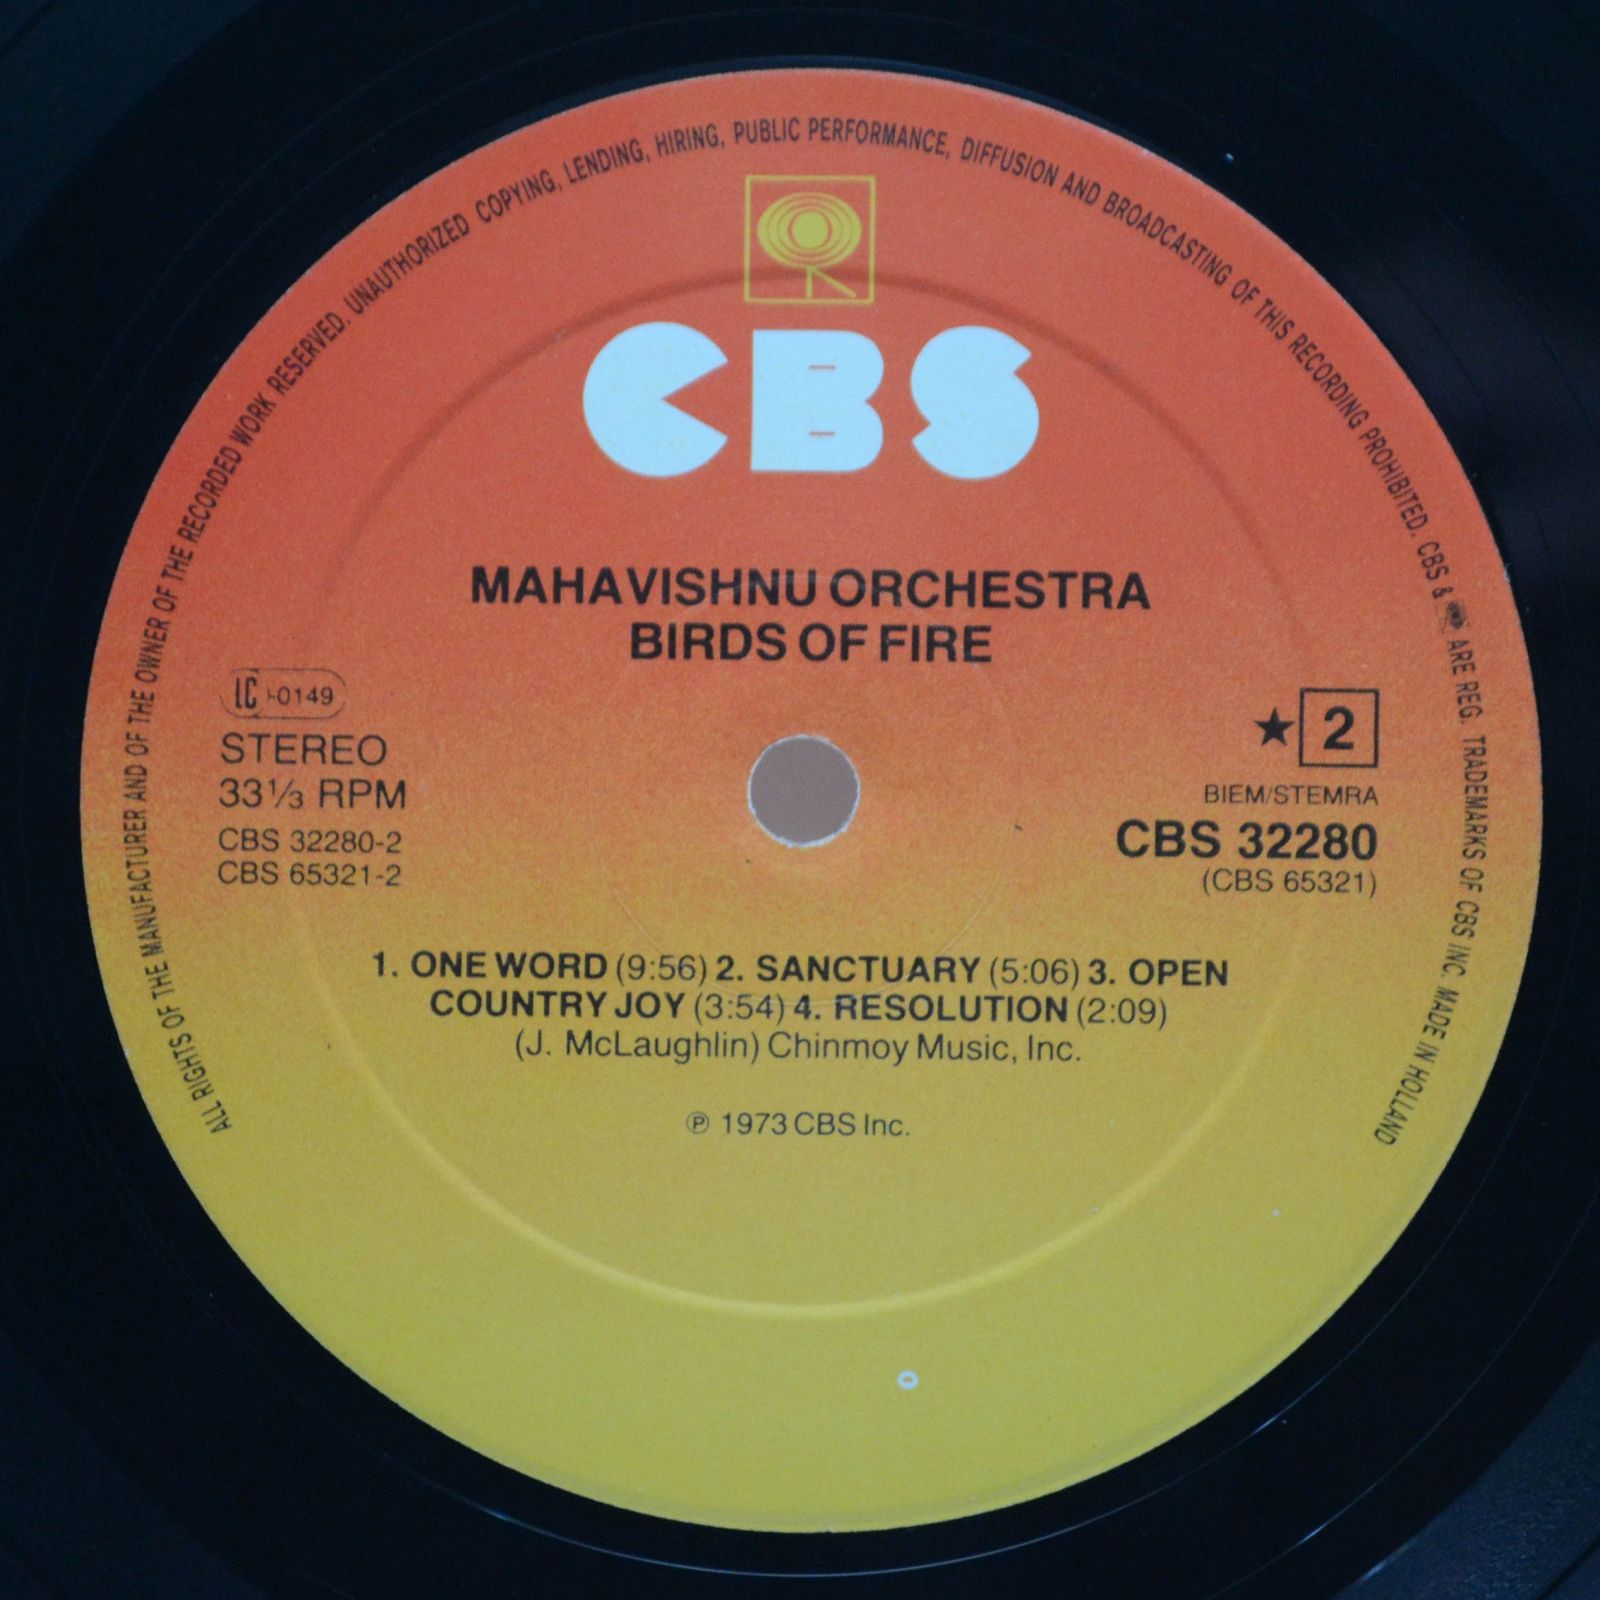 Mahavishnu Orchestra — Birds Of Fire, 1972